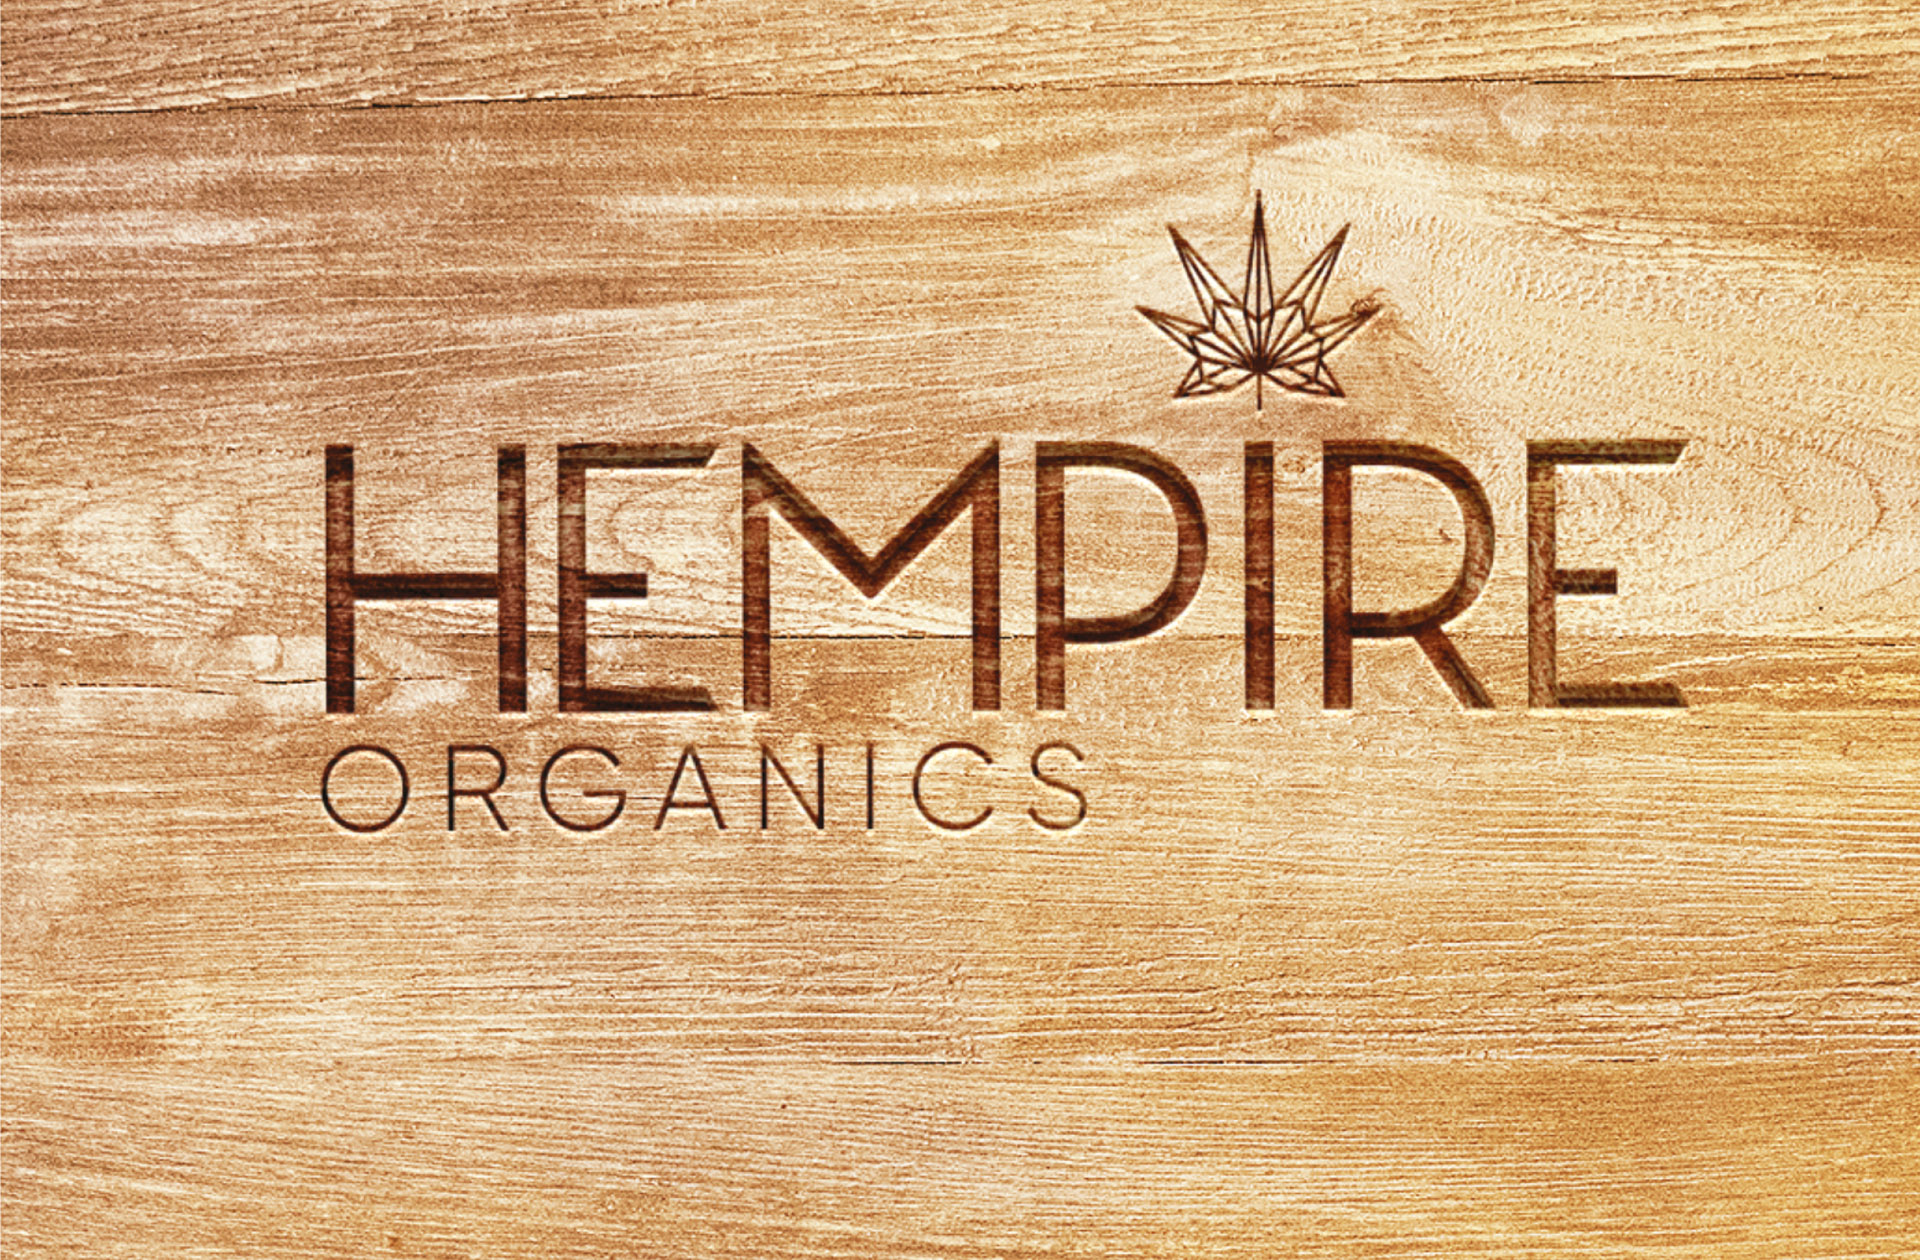 Hempire Organics